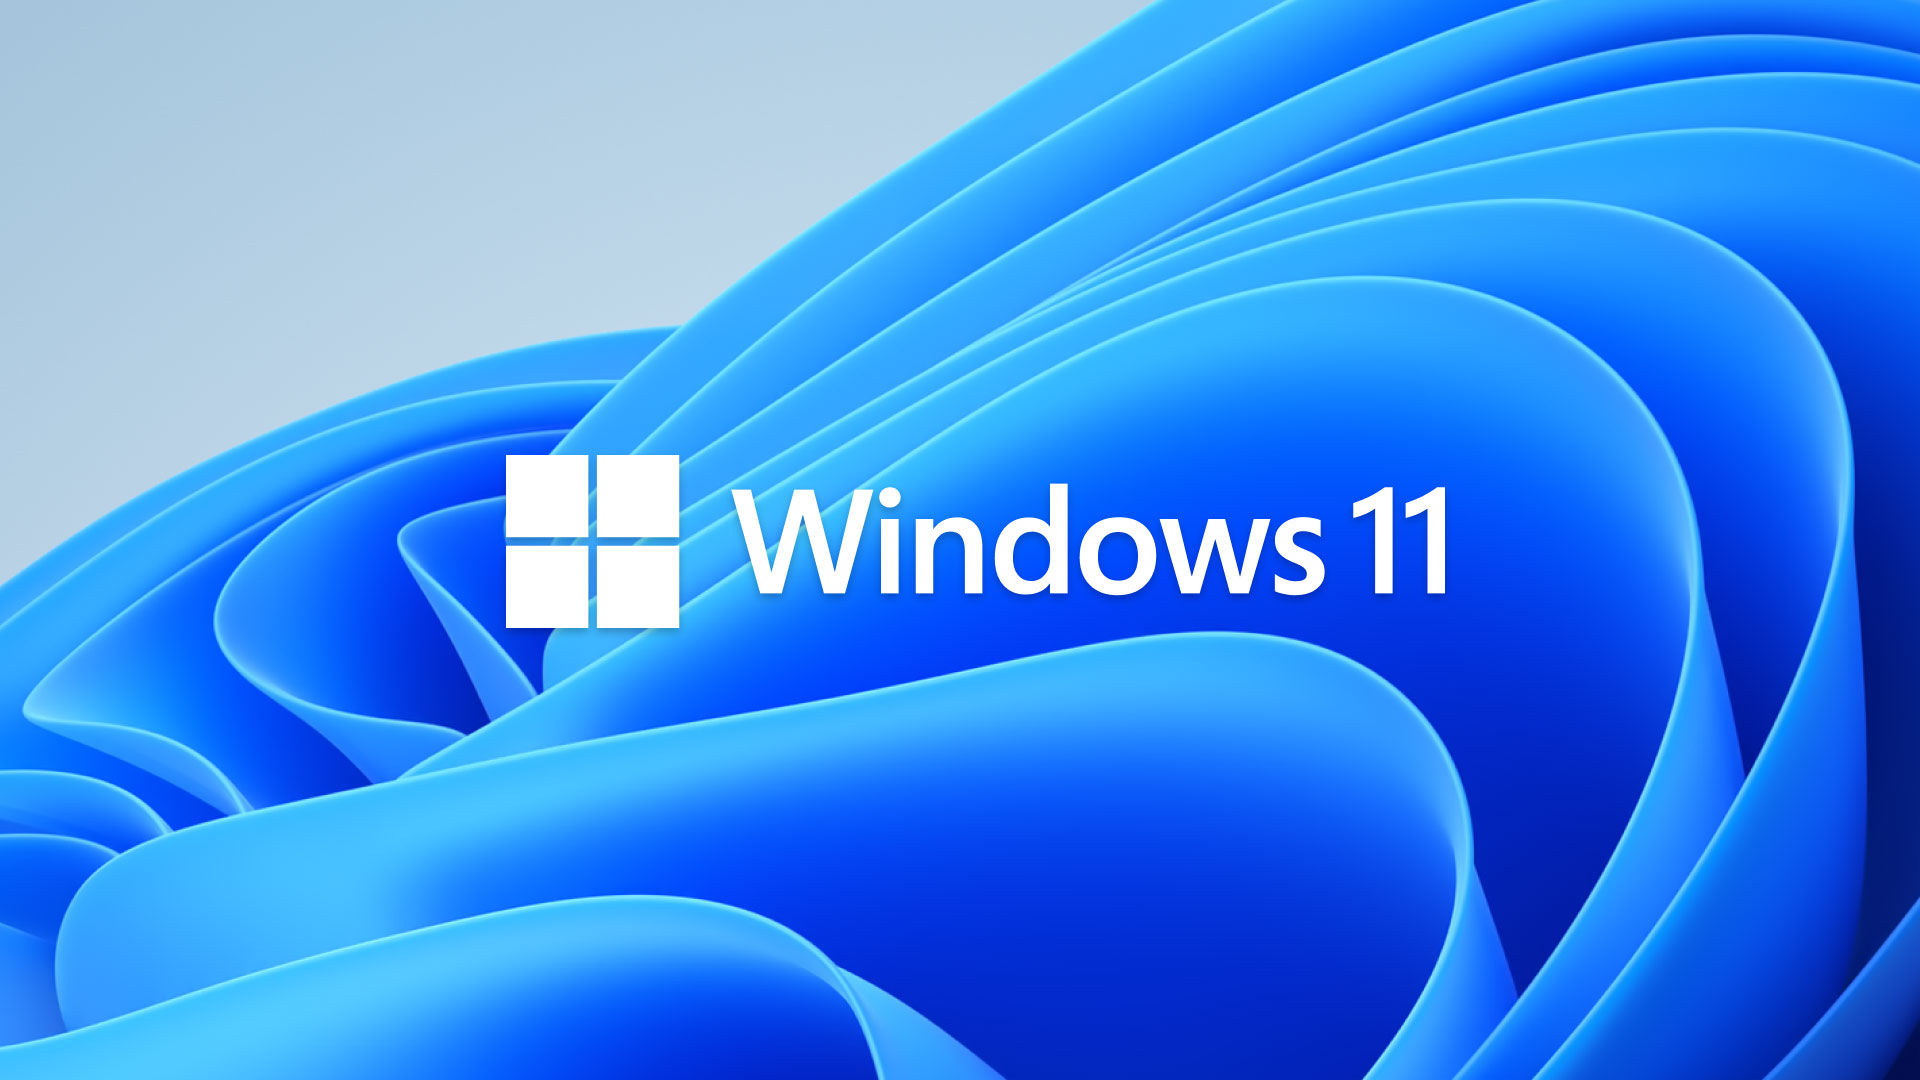 11 Windows Logo